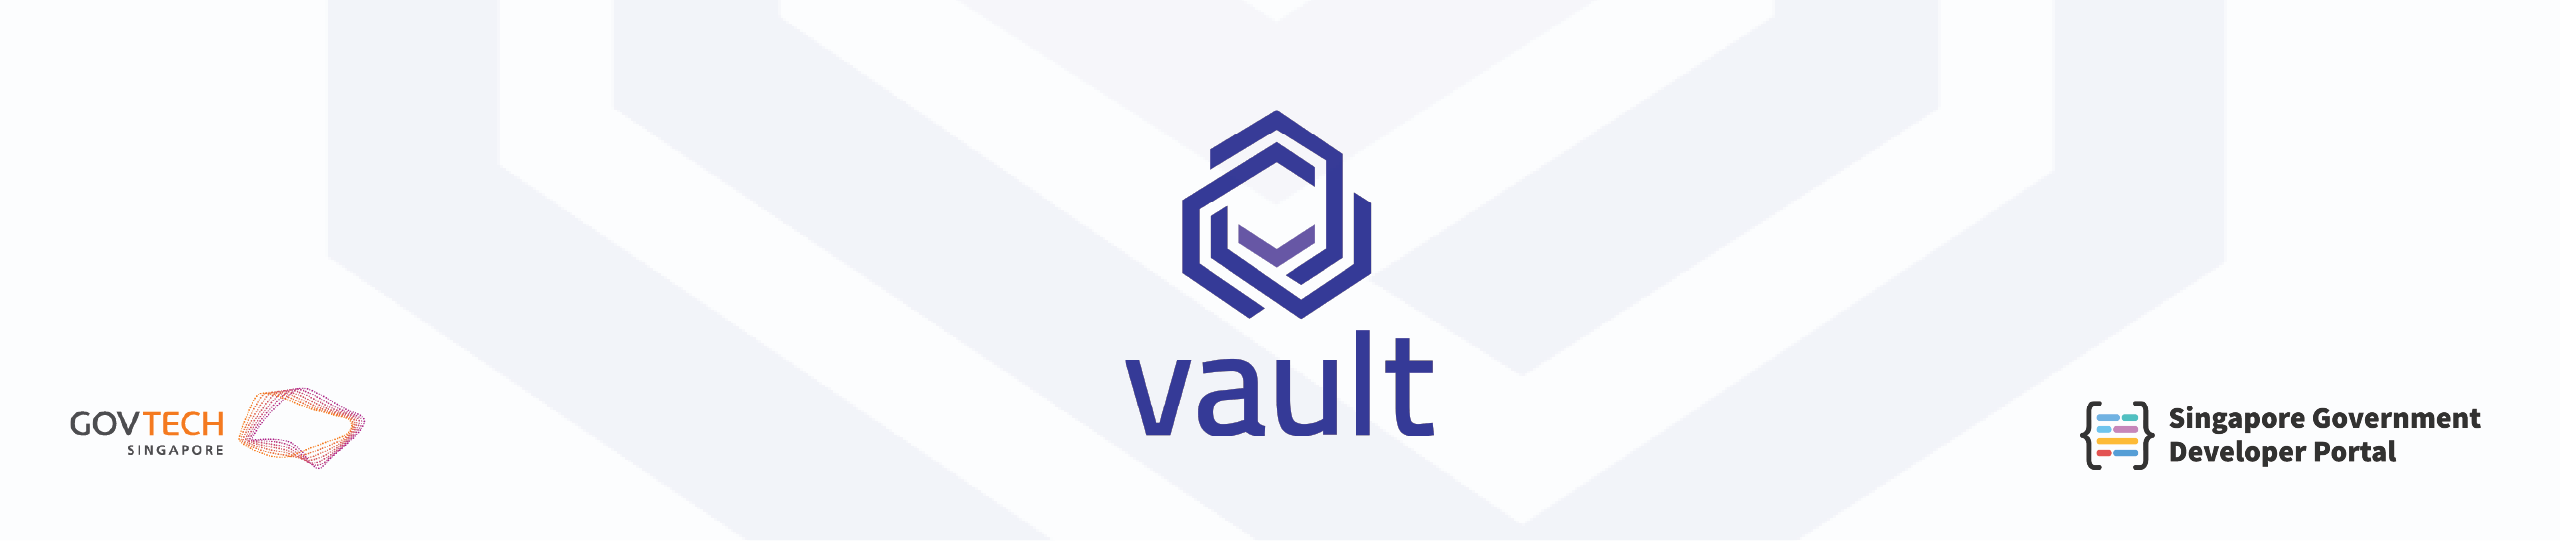 Vault header banner for Singapore Government Developer Portal